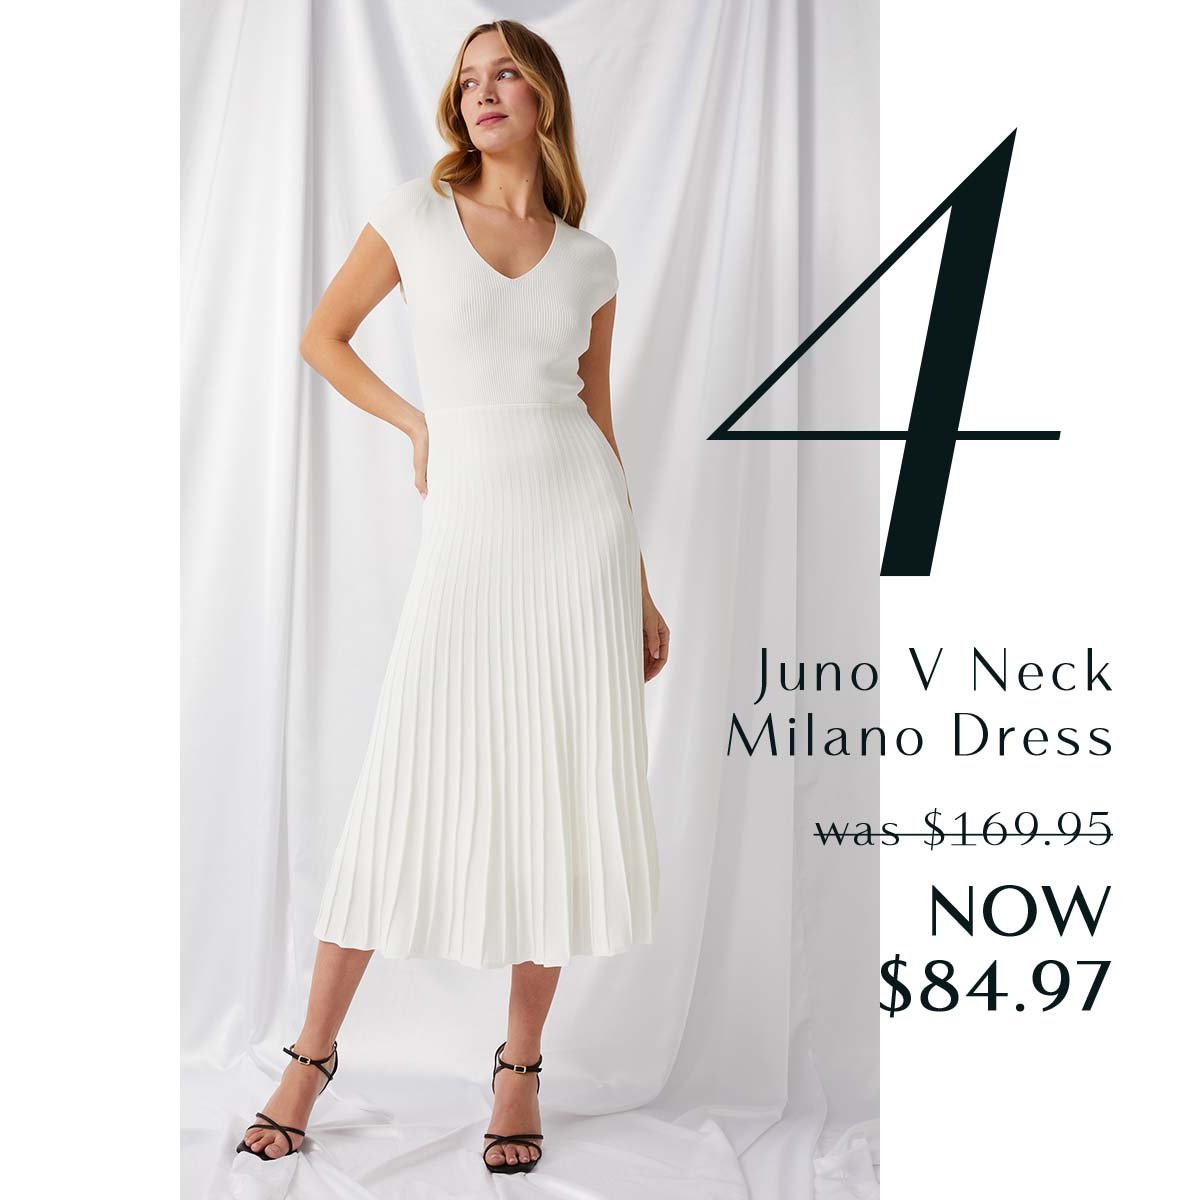 4. Juno V Neck Milano Dress was $169.95 NOW $84.97